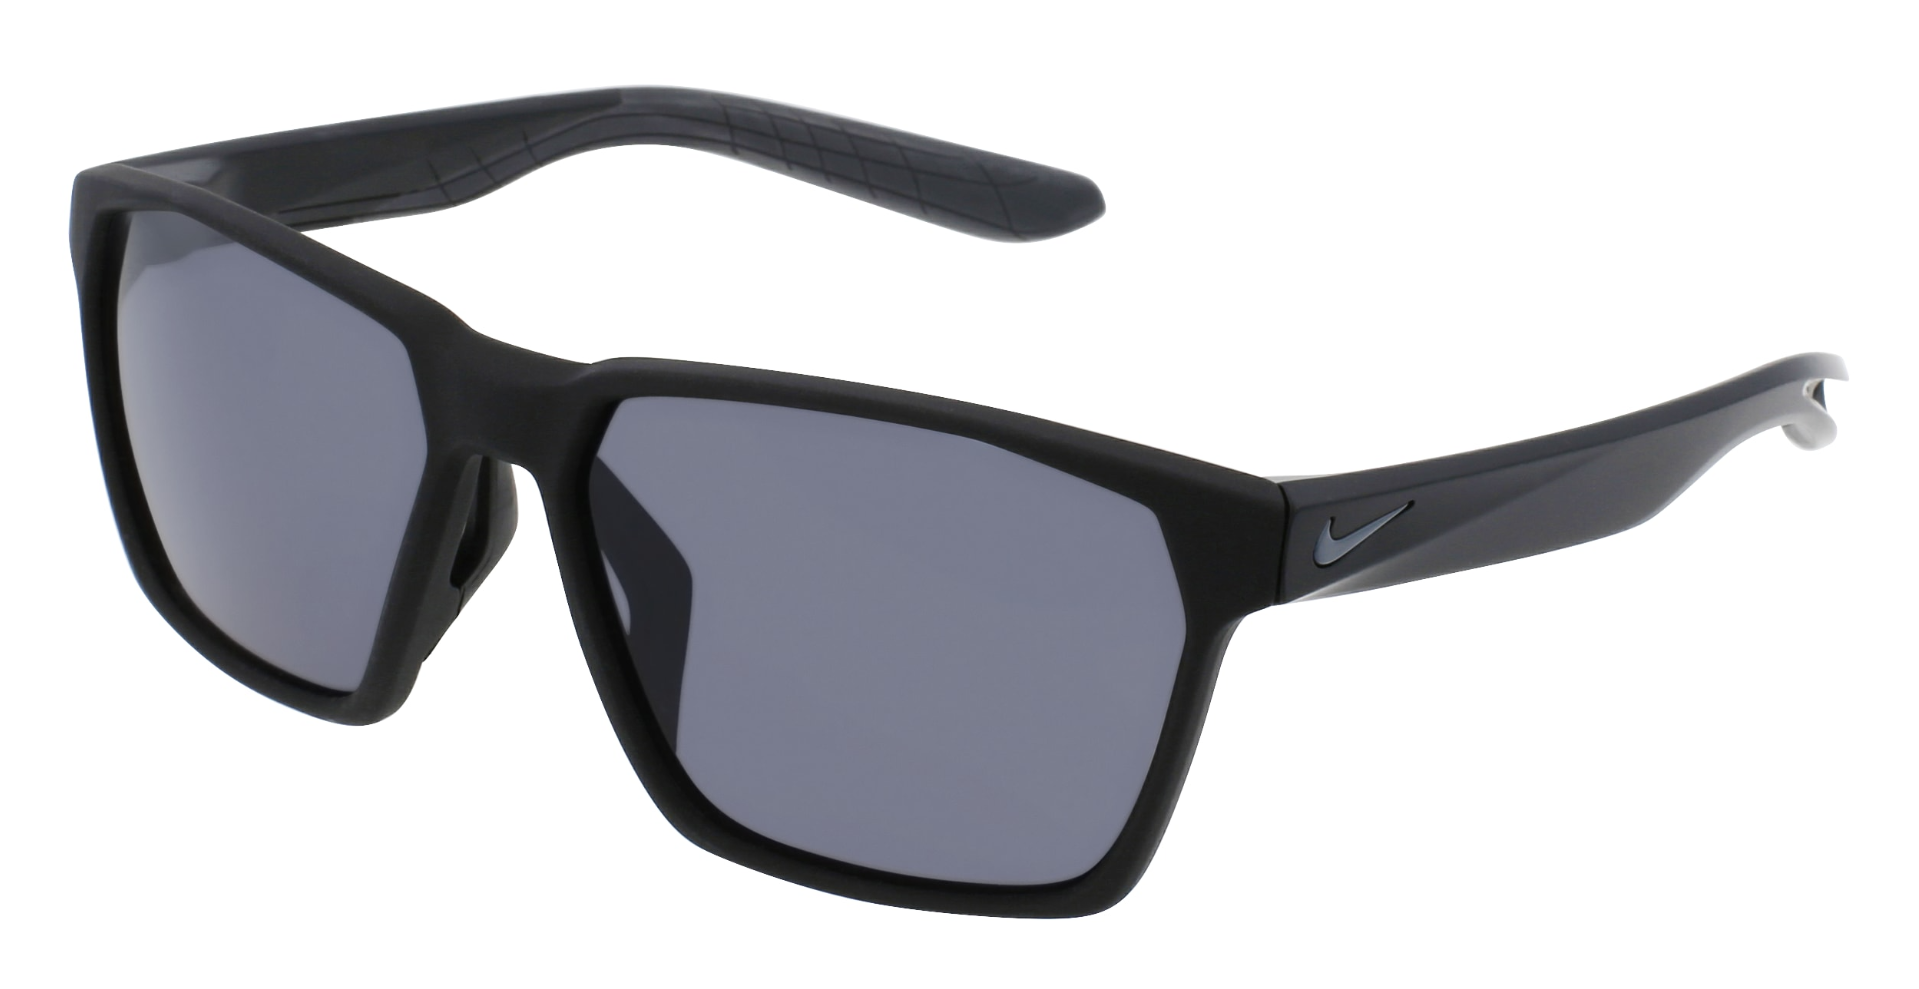 Nike Maverick Small sunglasses in matte black with dark grey square lenses.